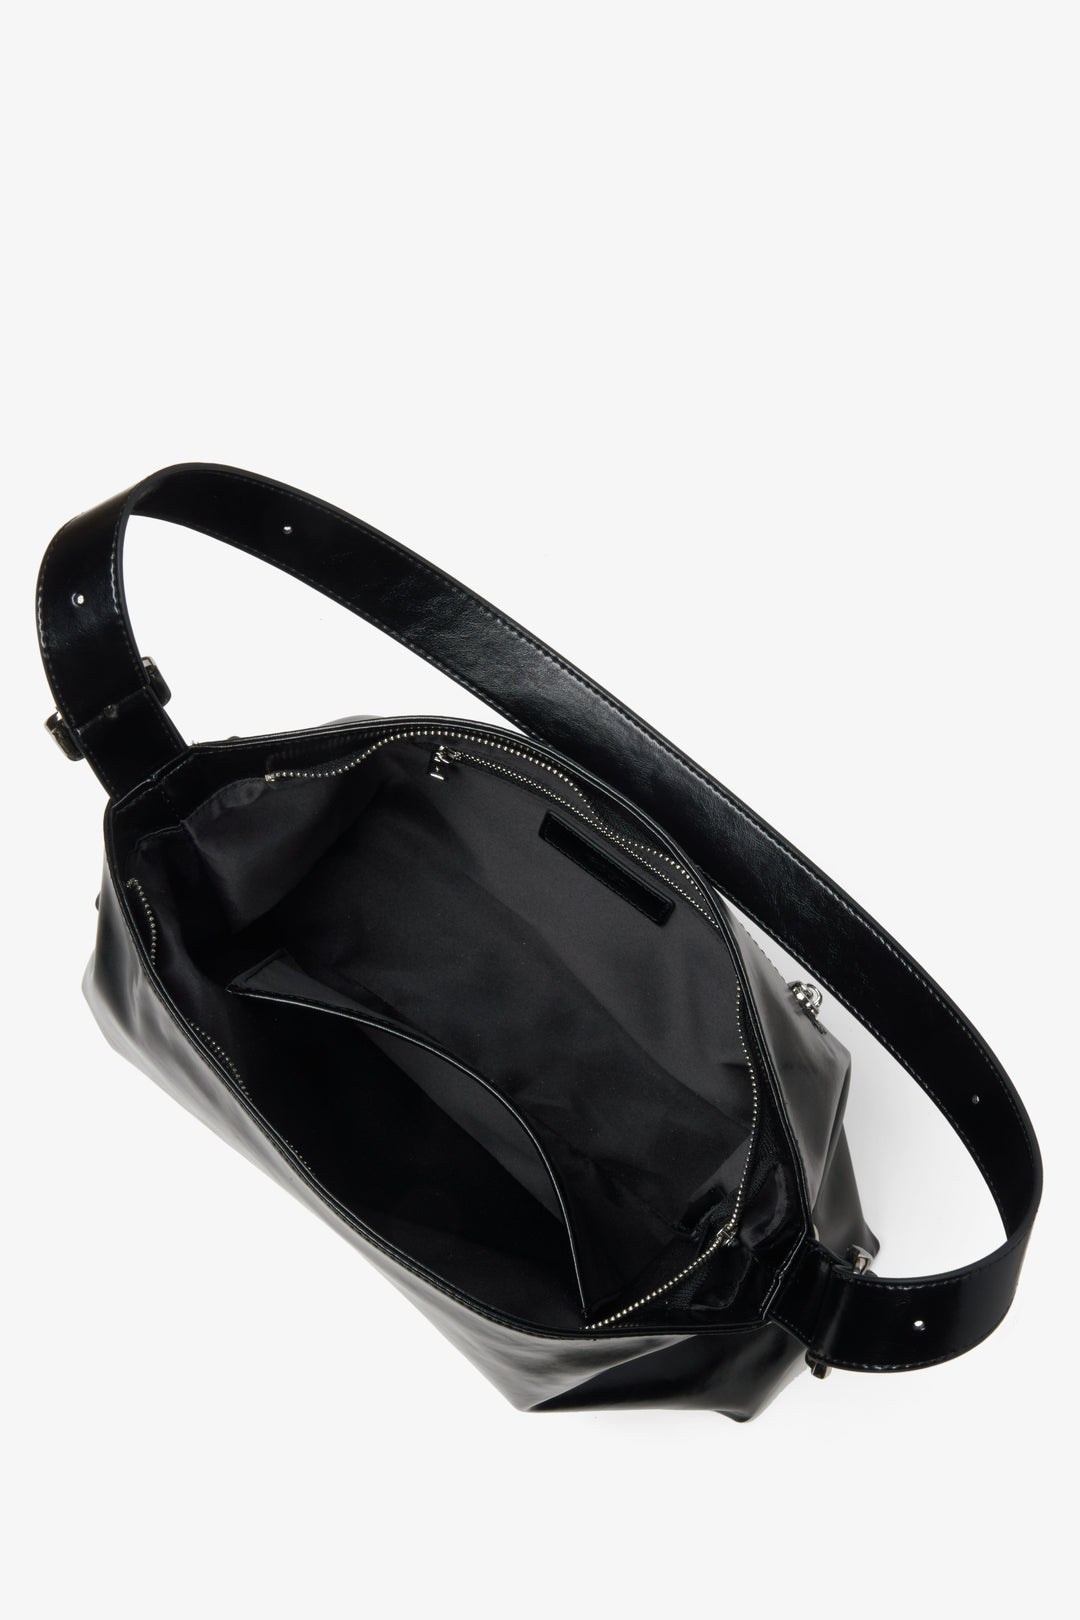 Women's black handbag Estro - a close-up on the main compartment.